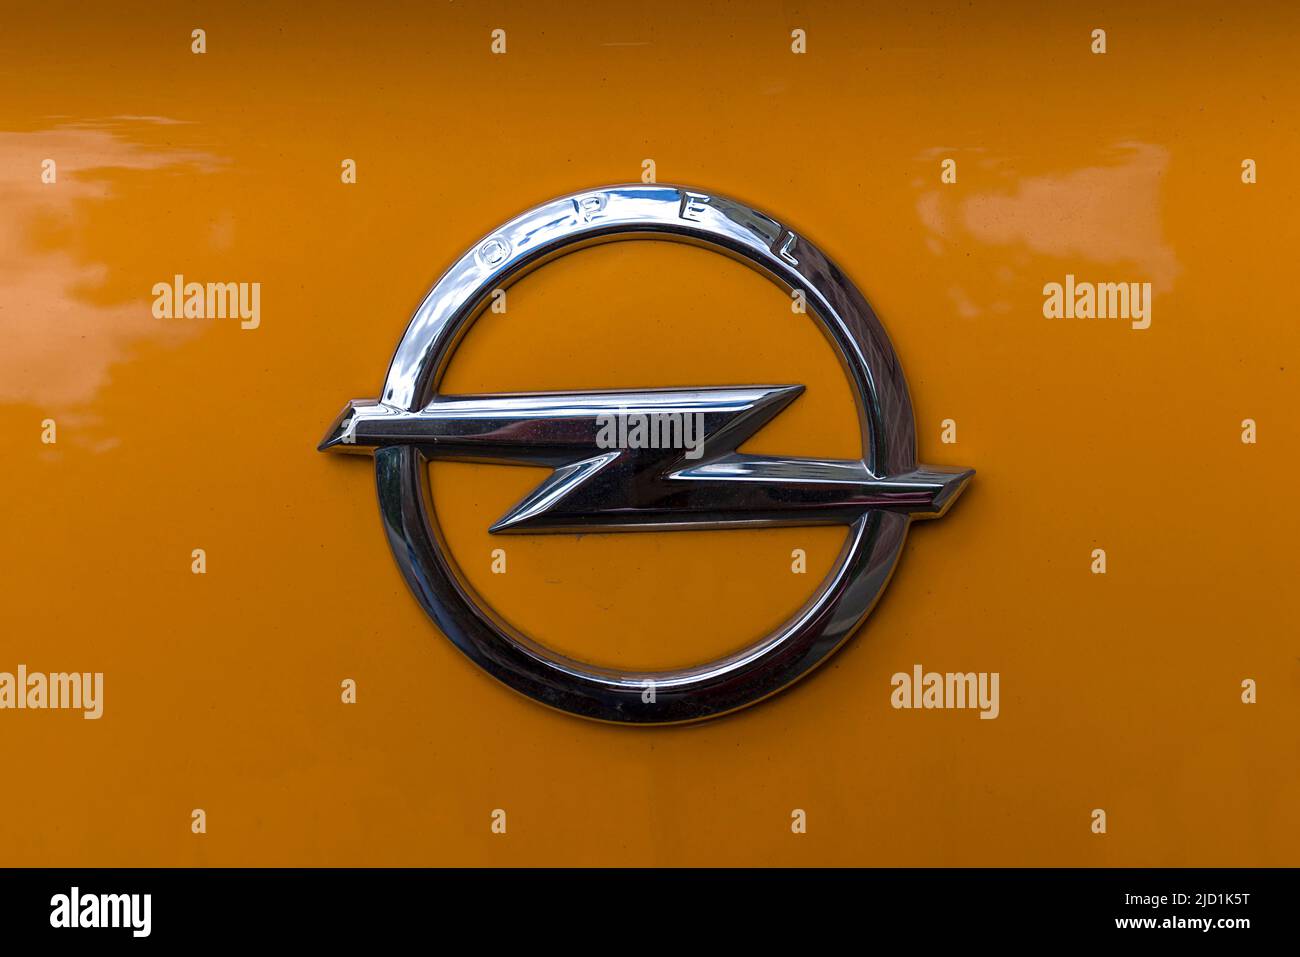 Opel car logo badge close-up Stock Photo - Alamy